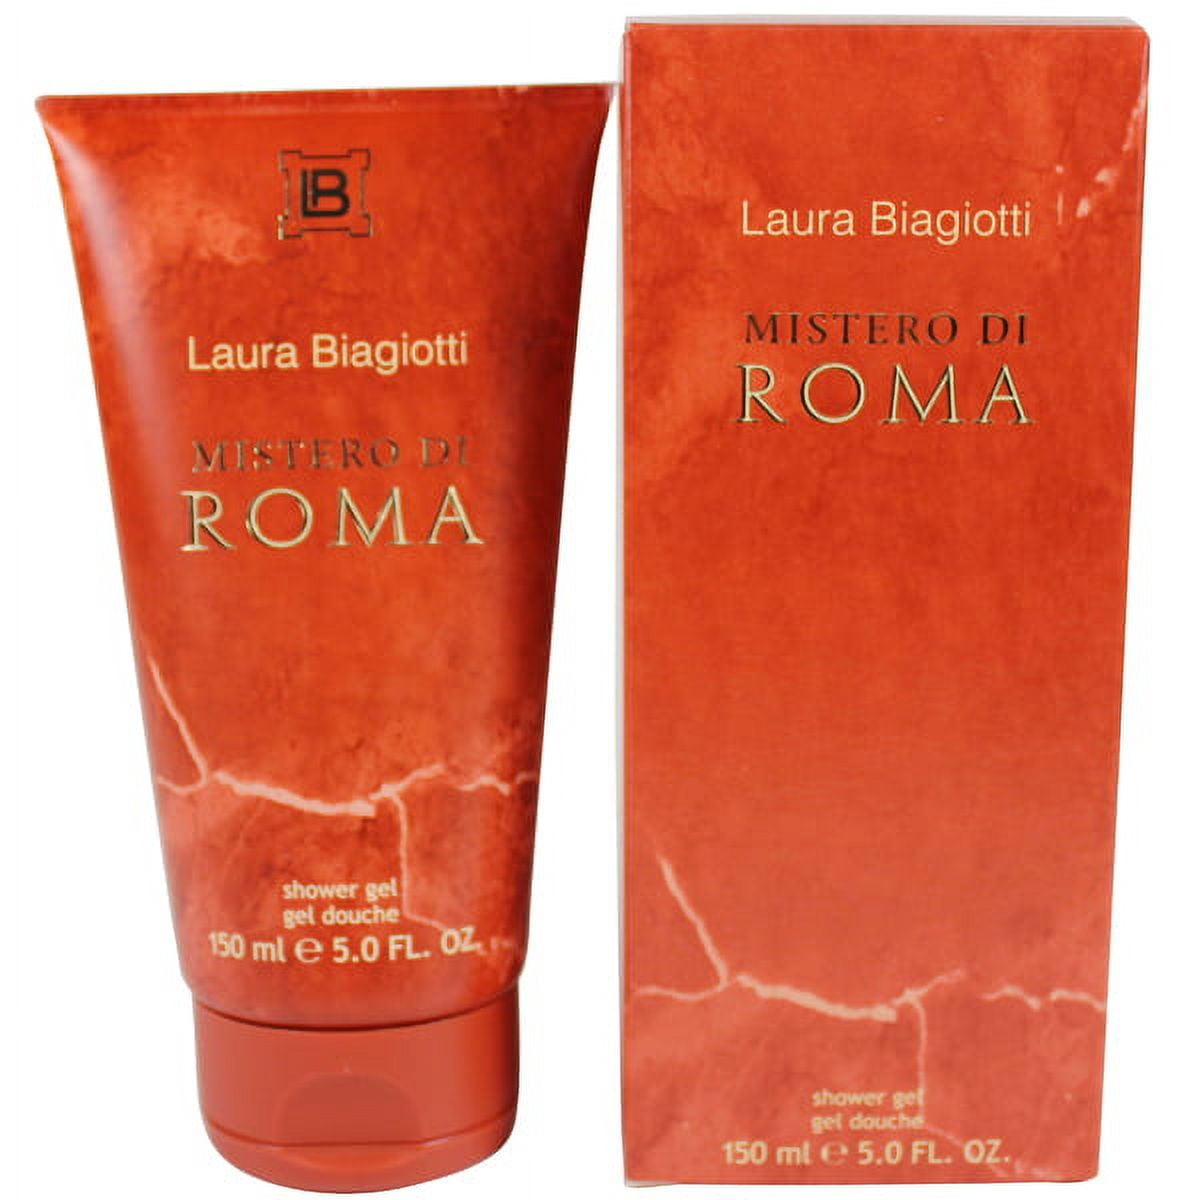 Misterio di Roma by Laura Biagiotti for Women Shower Gel 5 oz. New in Box